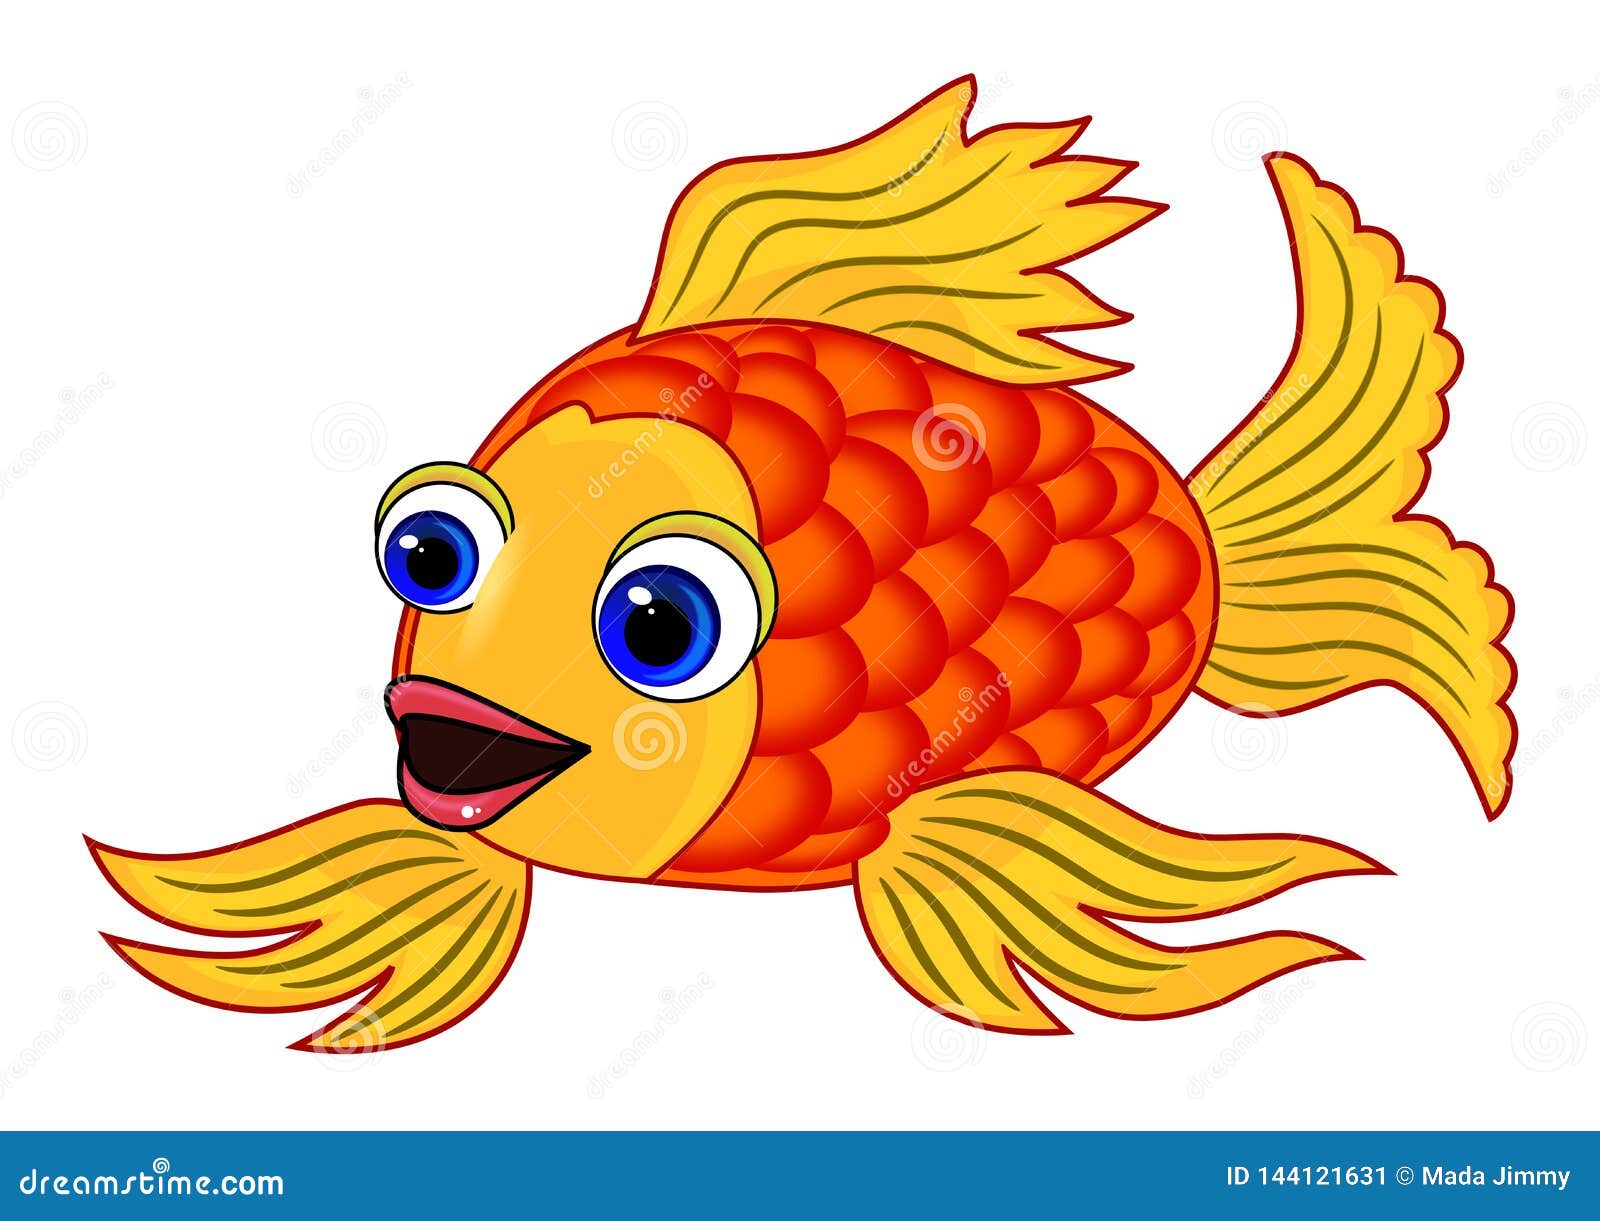 Goldfish Cartoon Illustration Stock Vector - Illustration of cartoon,  natural: 144121631